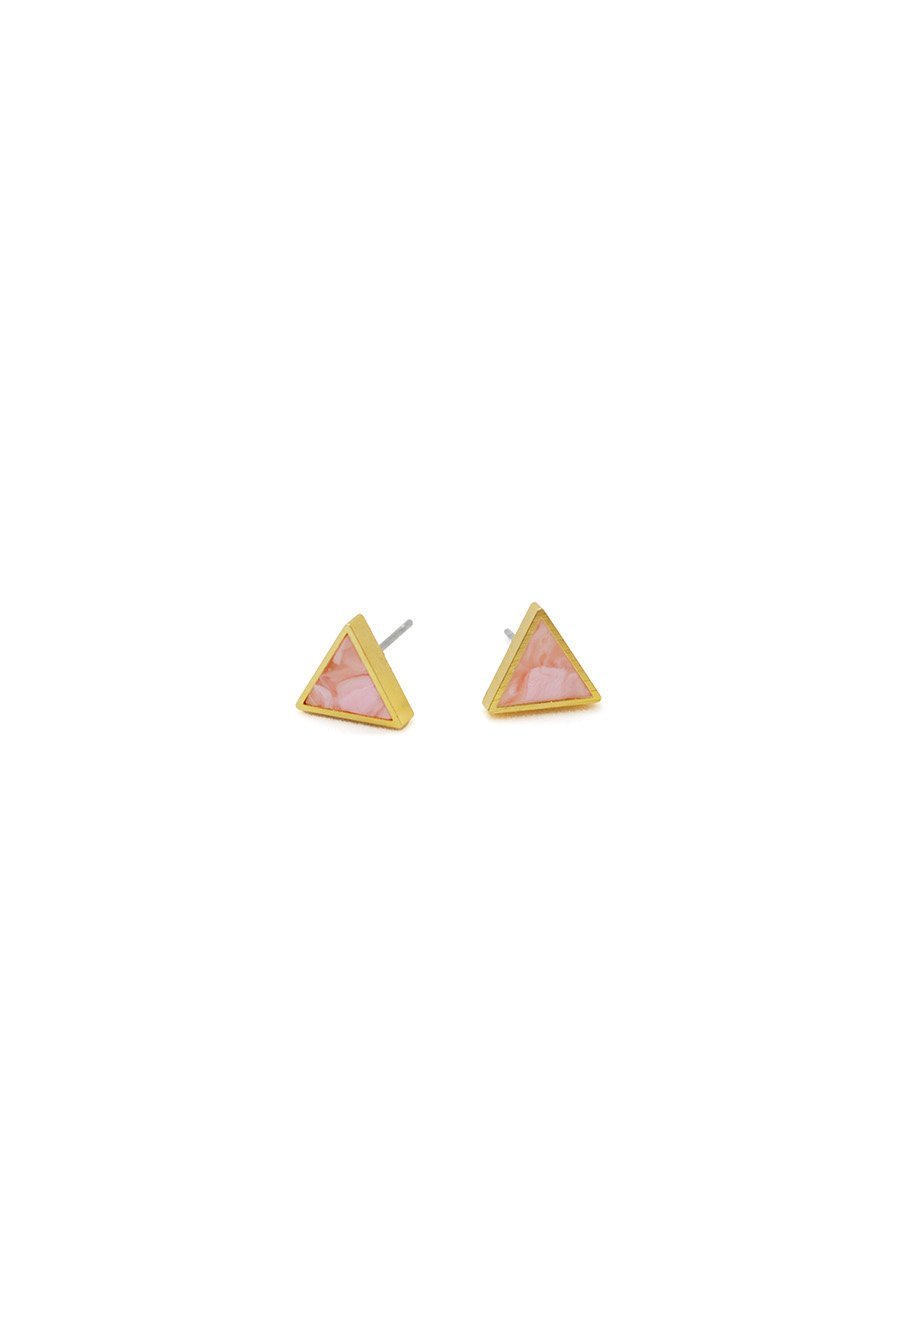 'Tri Me' Triangle Stud Earrings - Earrings - The Green Brick Boutique